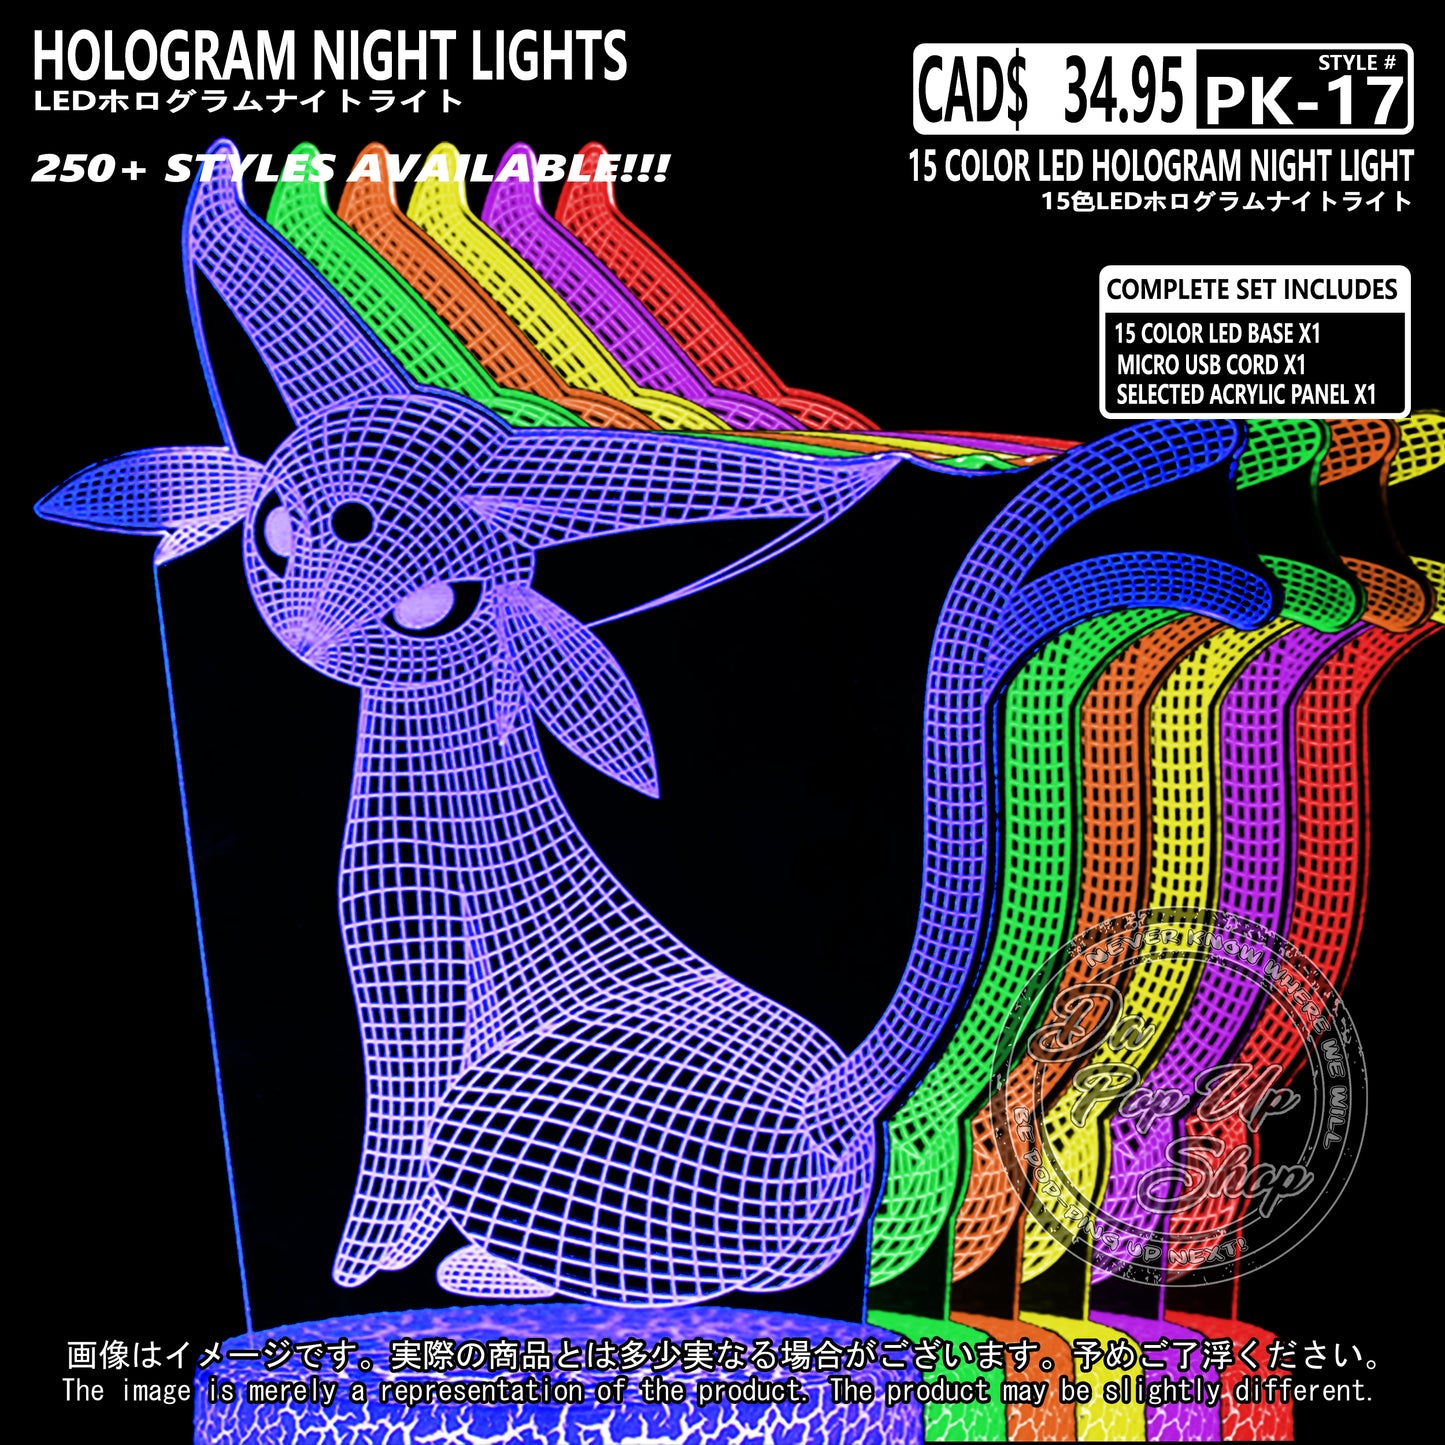 (PKM-17) ESPEON Pokemon Hologram LED Night Light